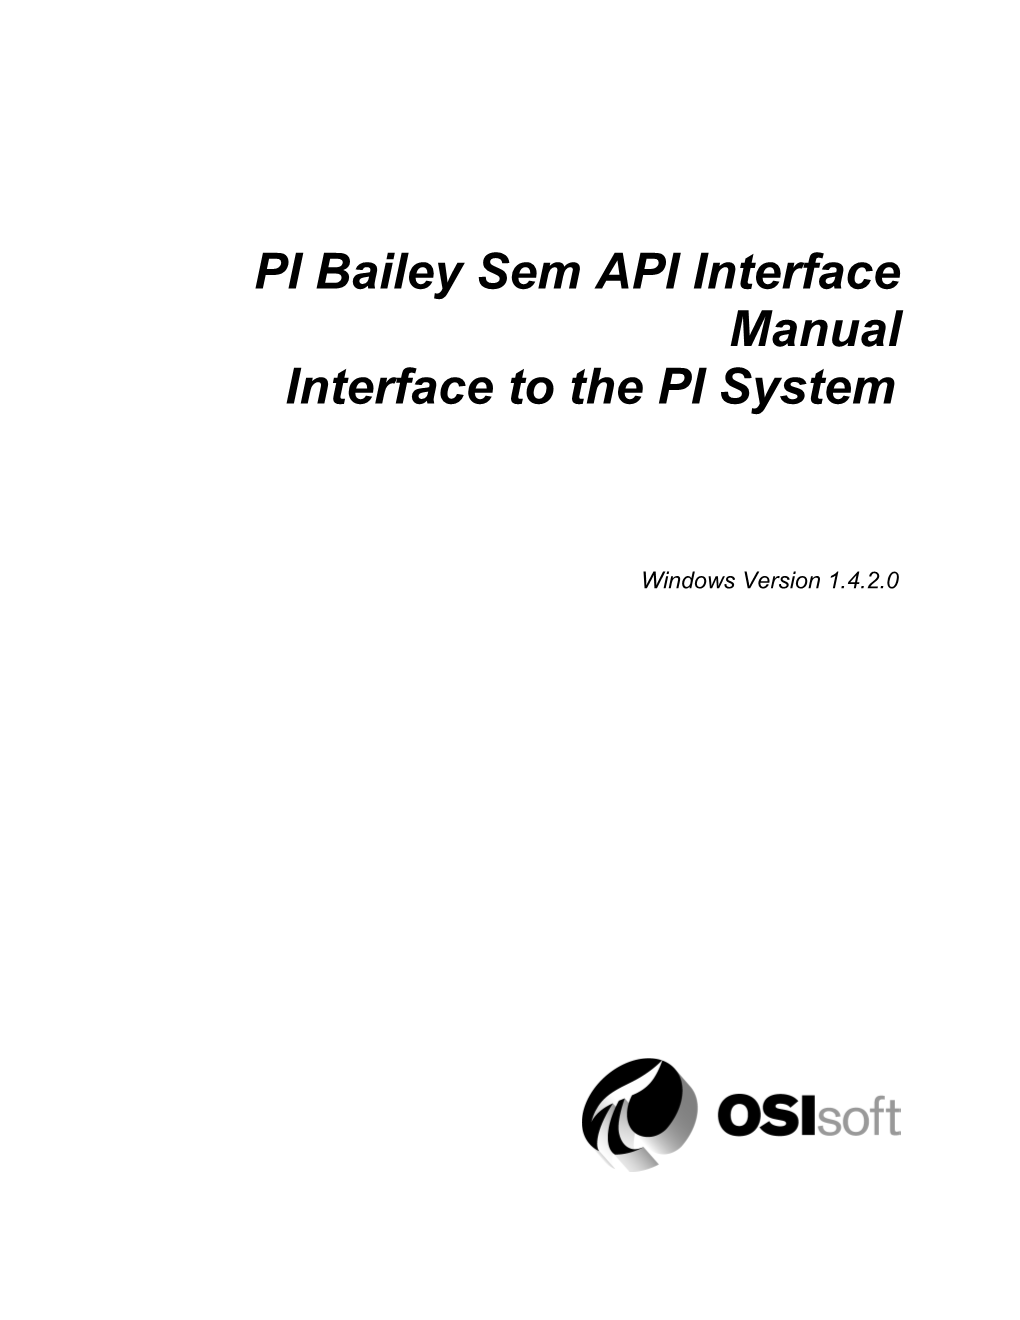 PI Bailey Sem API Interface Manual